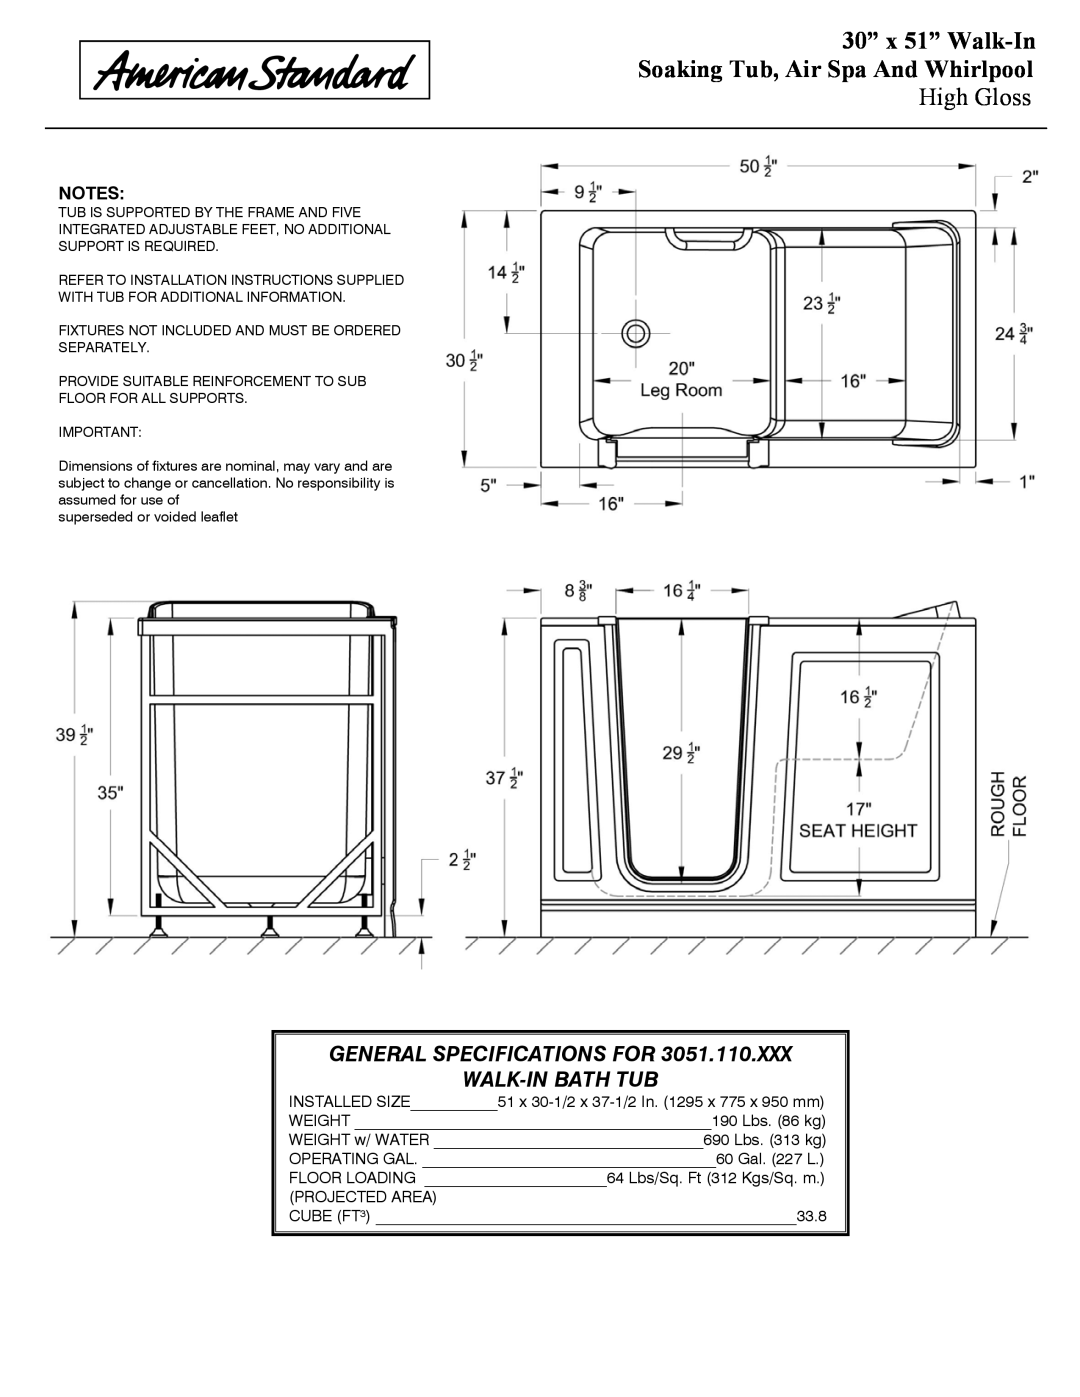 American Standard ANSI Z 124.1.2 dimensions 30” x 51” Walk-In, Soaking Tub, Air Spa And Whirlpool, High Gloss 